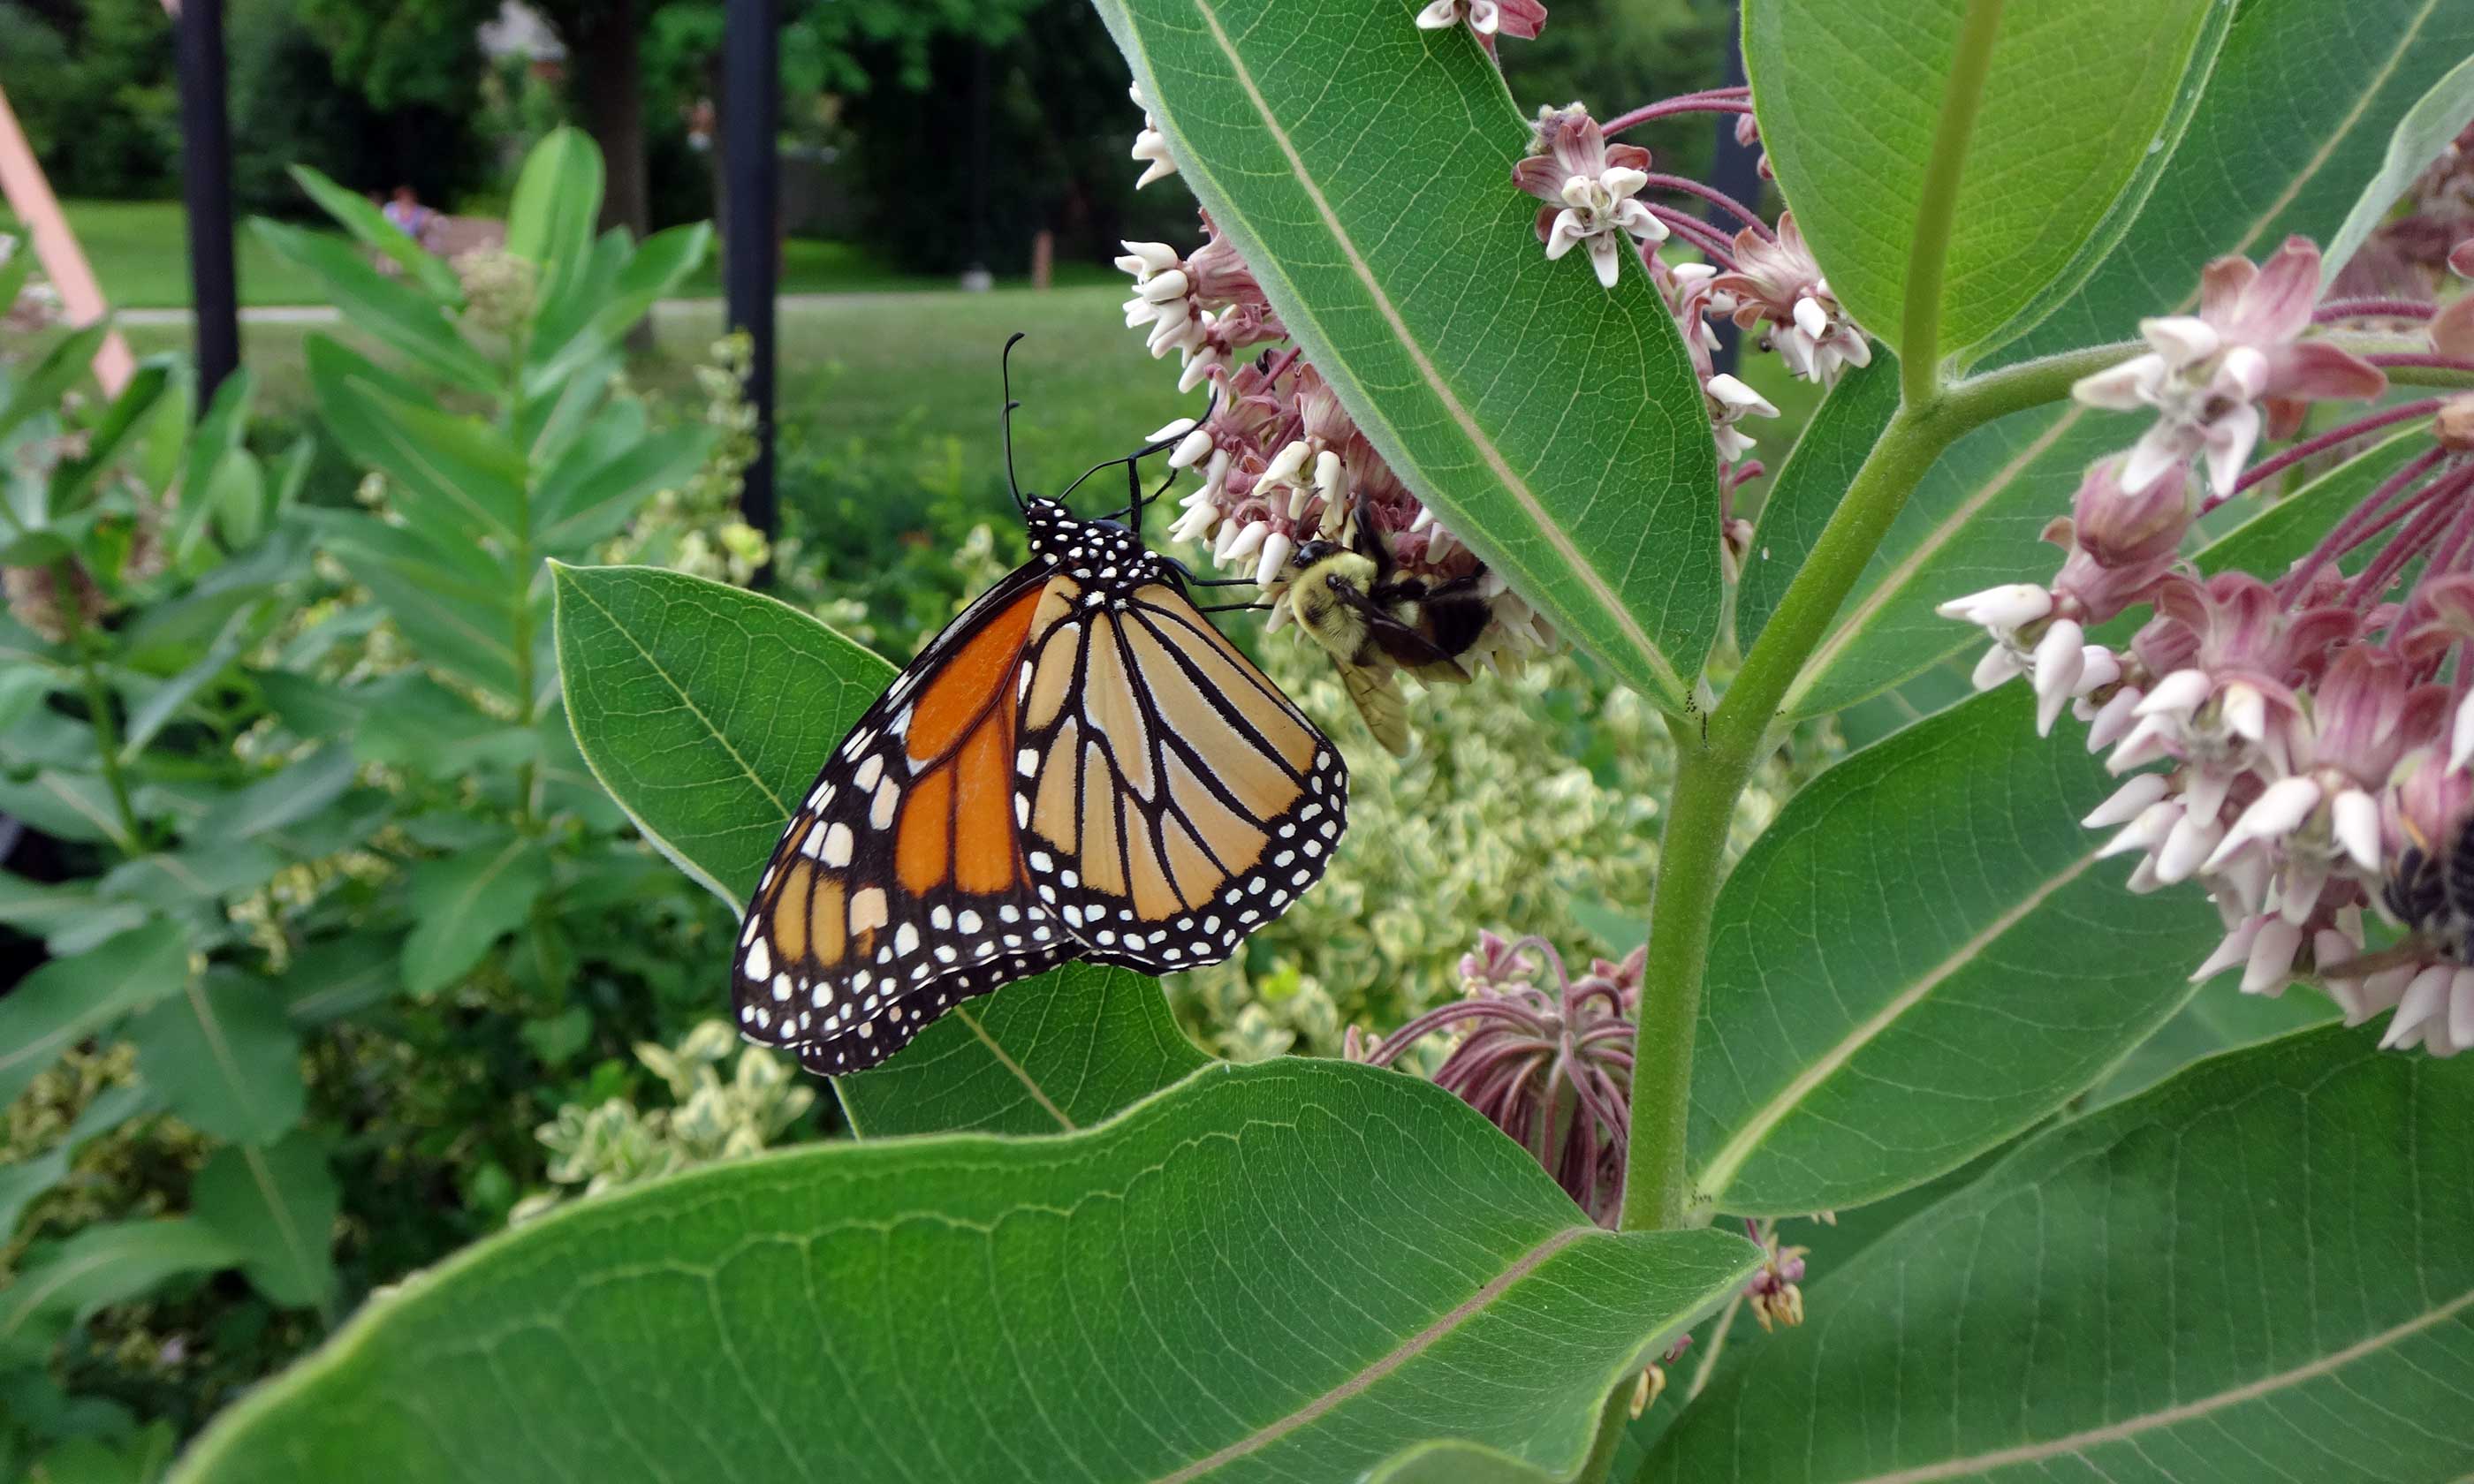 Monarch butterfly and bumblebee on milkweed